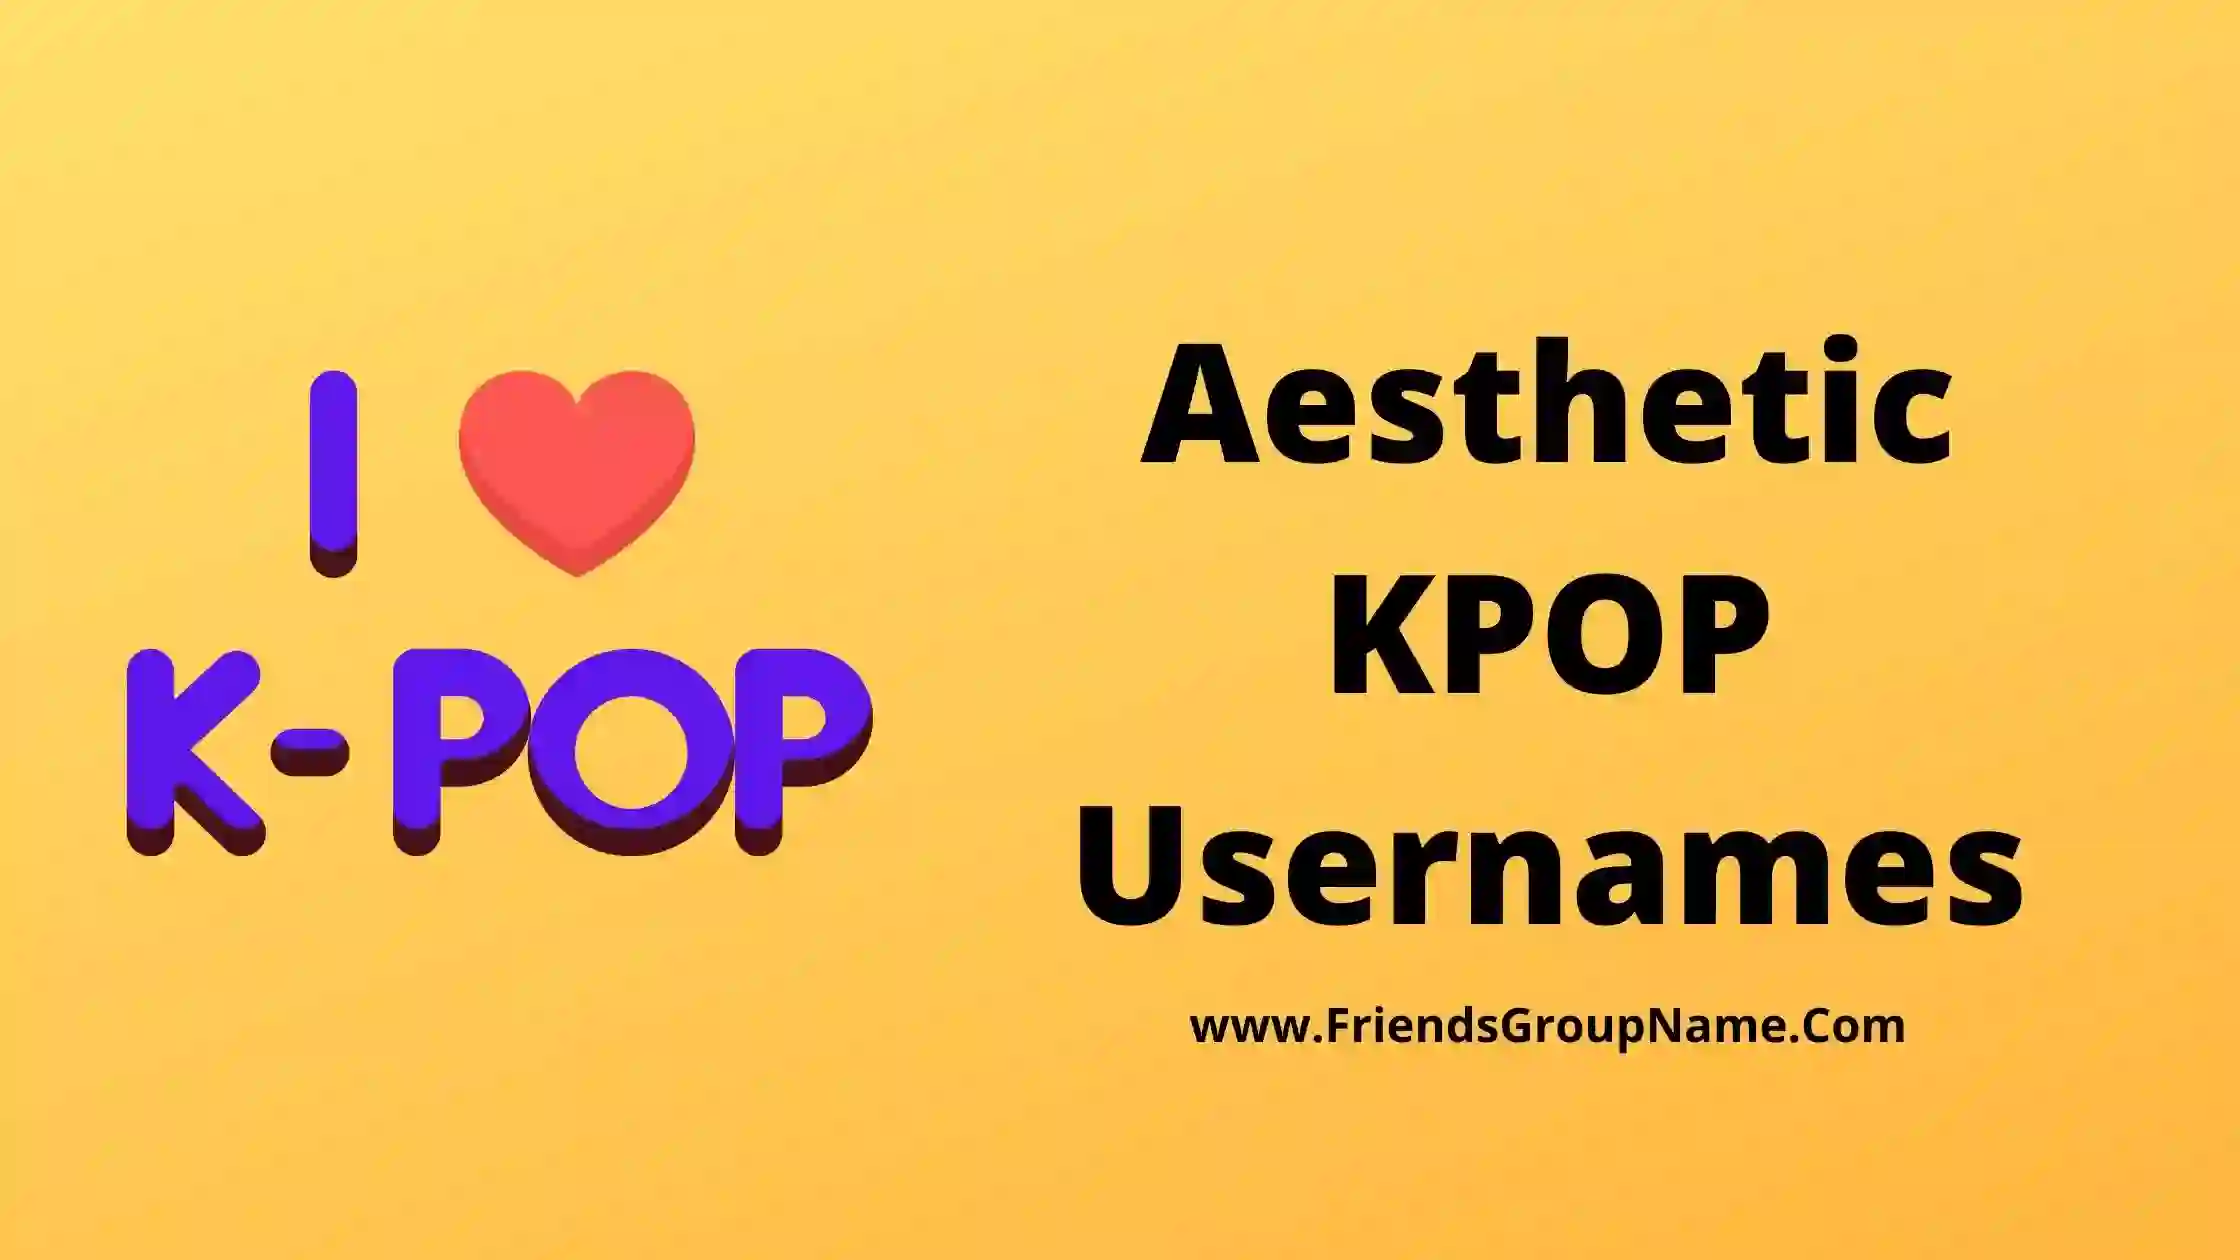 Aesthetic KPOP Usernames